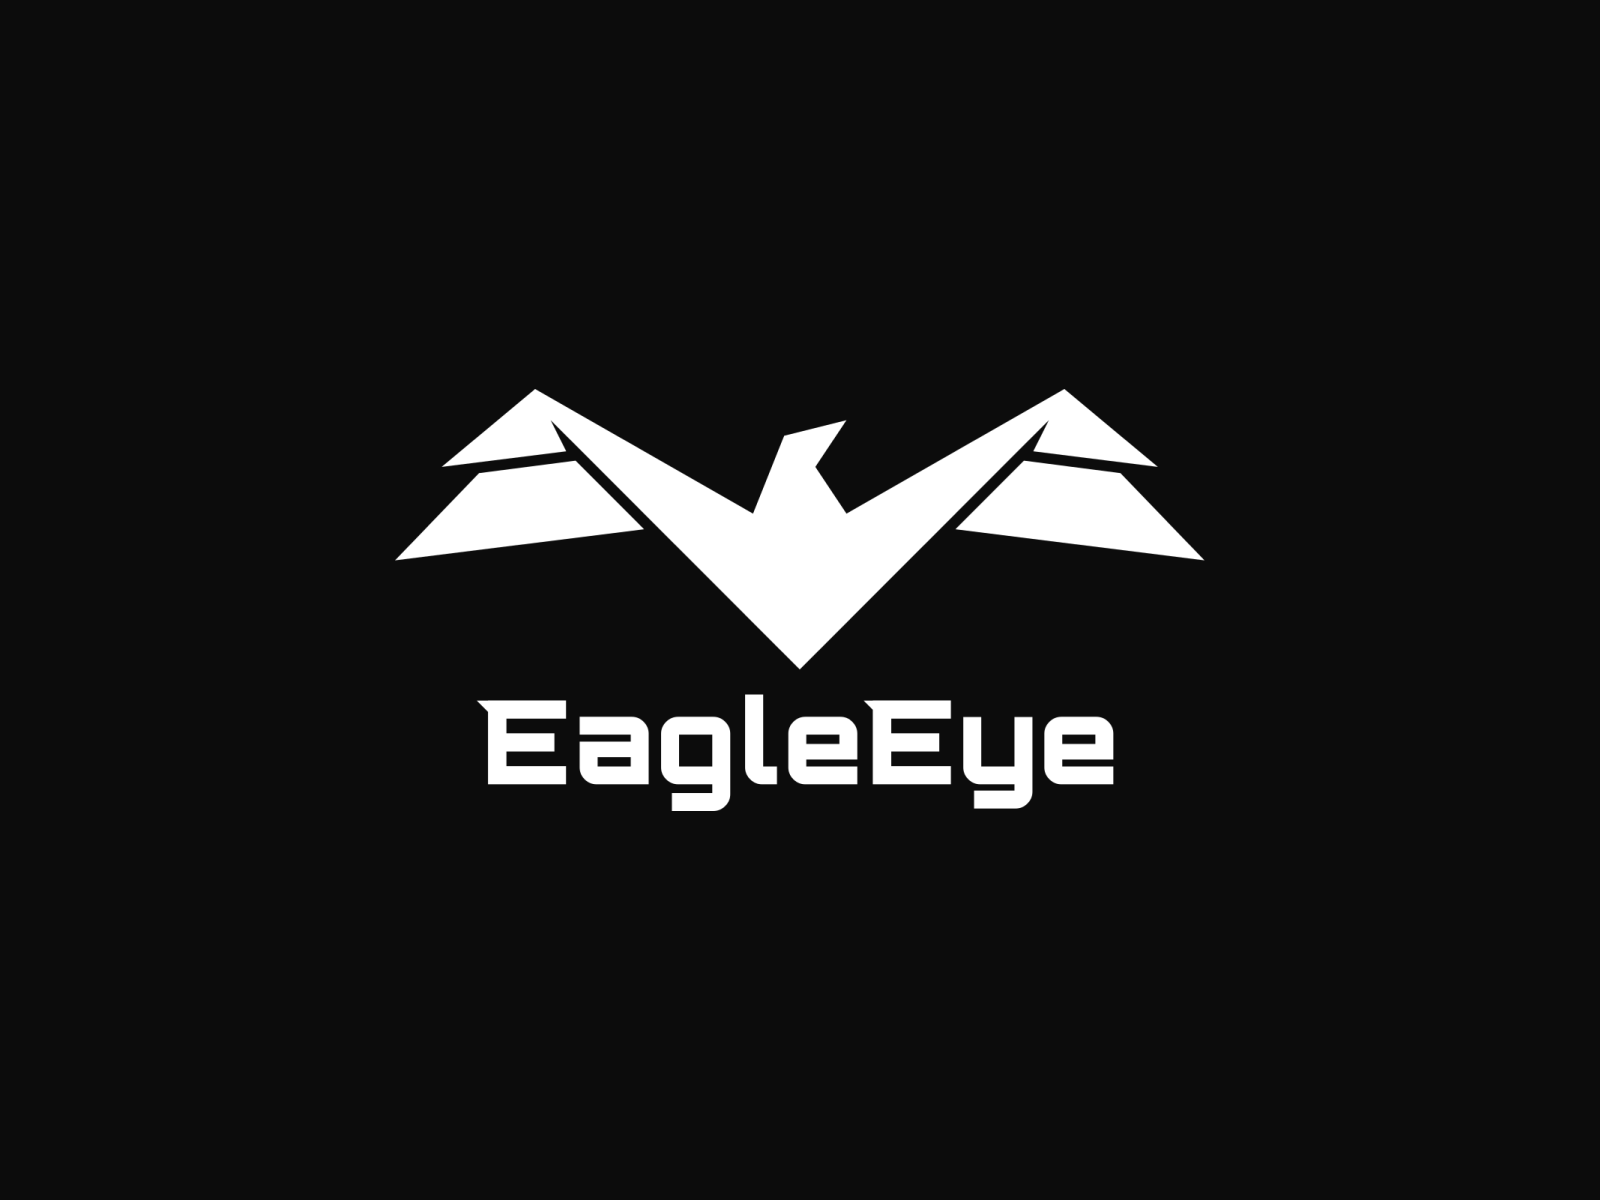 EagleEye Logo by Dominic Abela on Dribbble